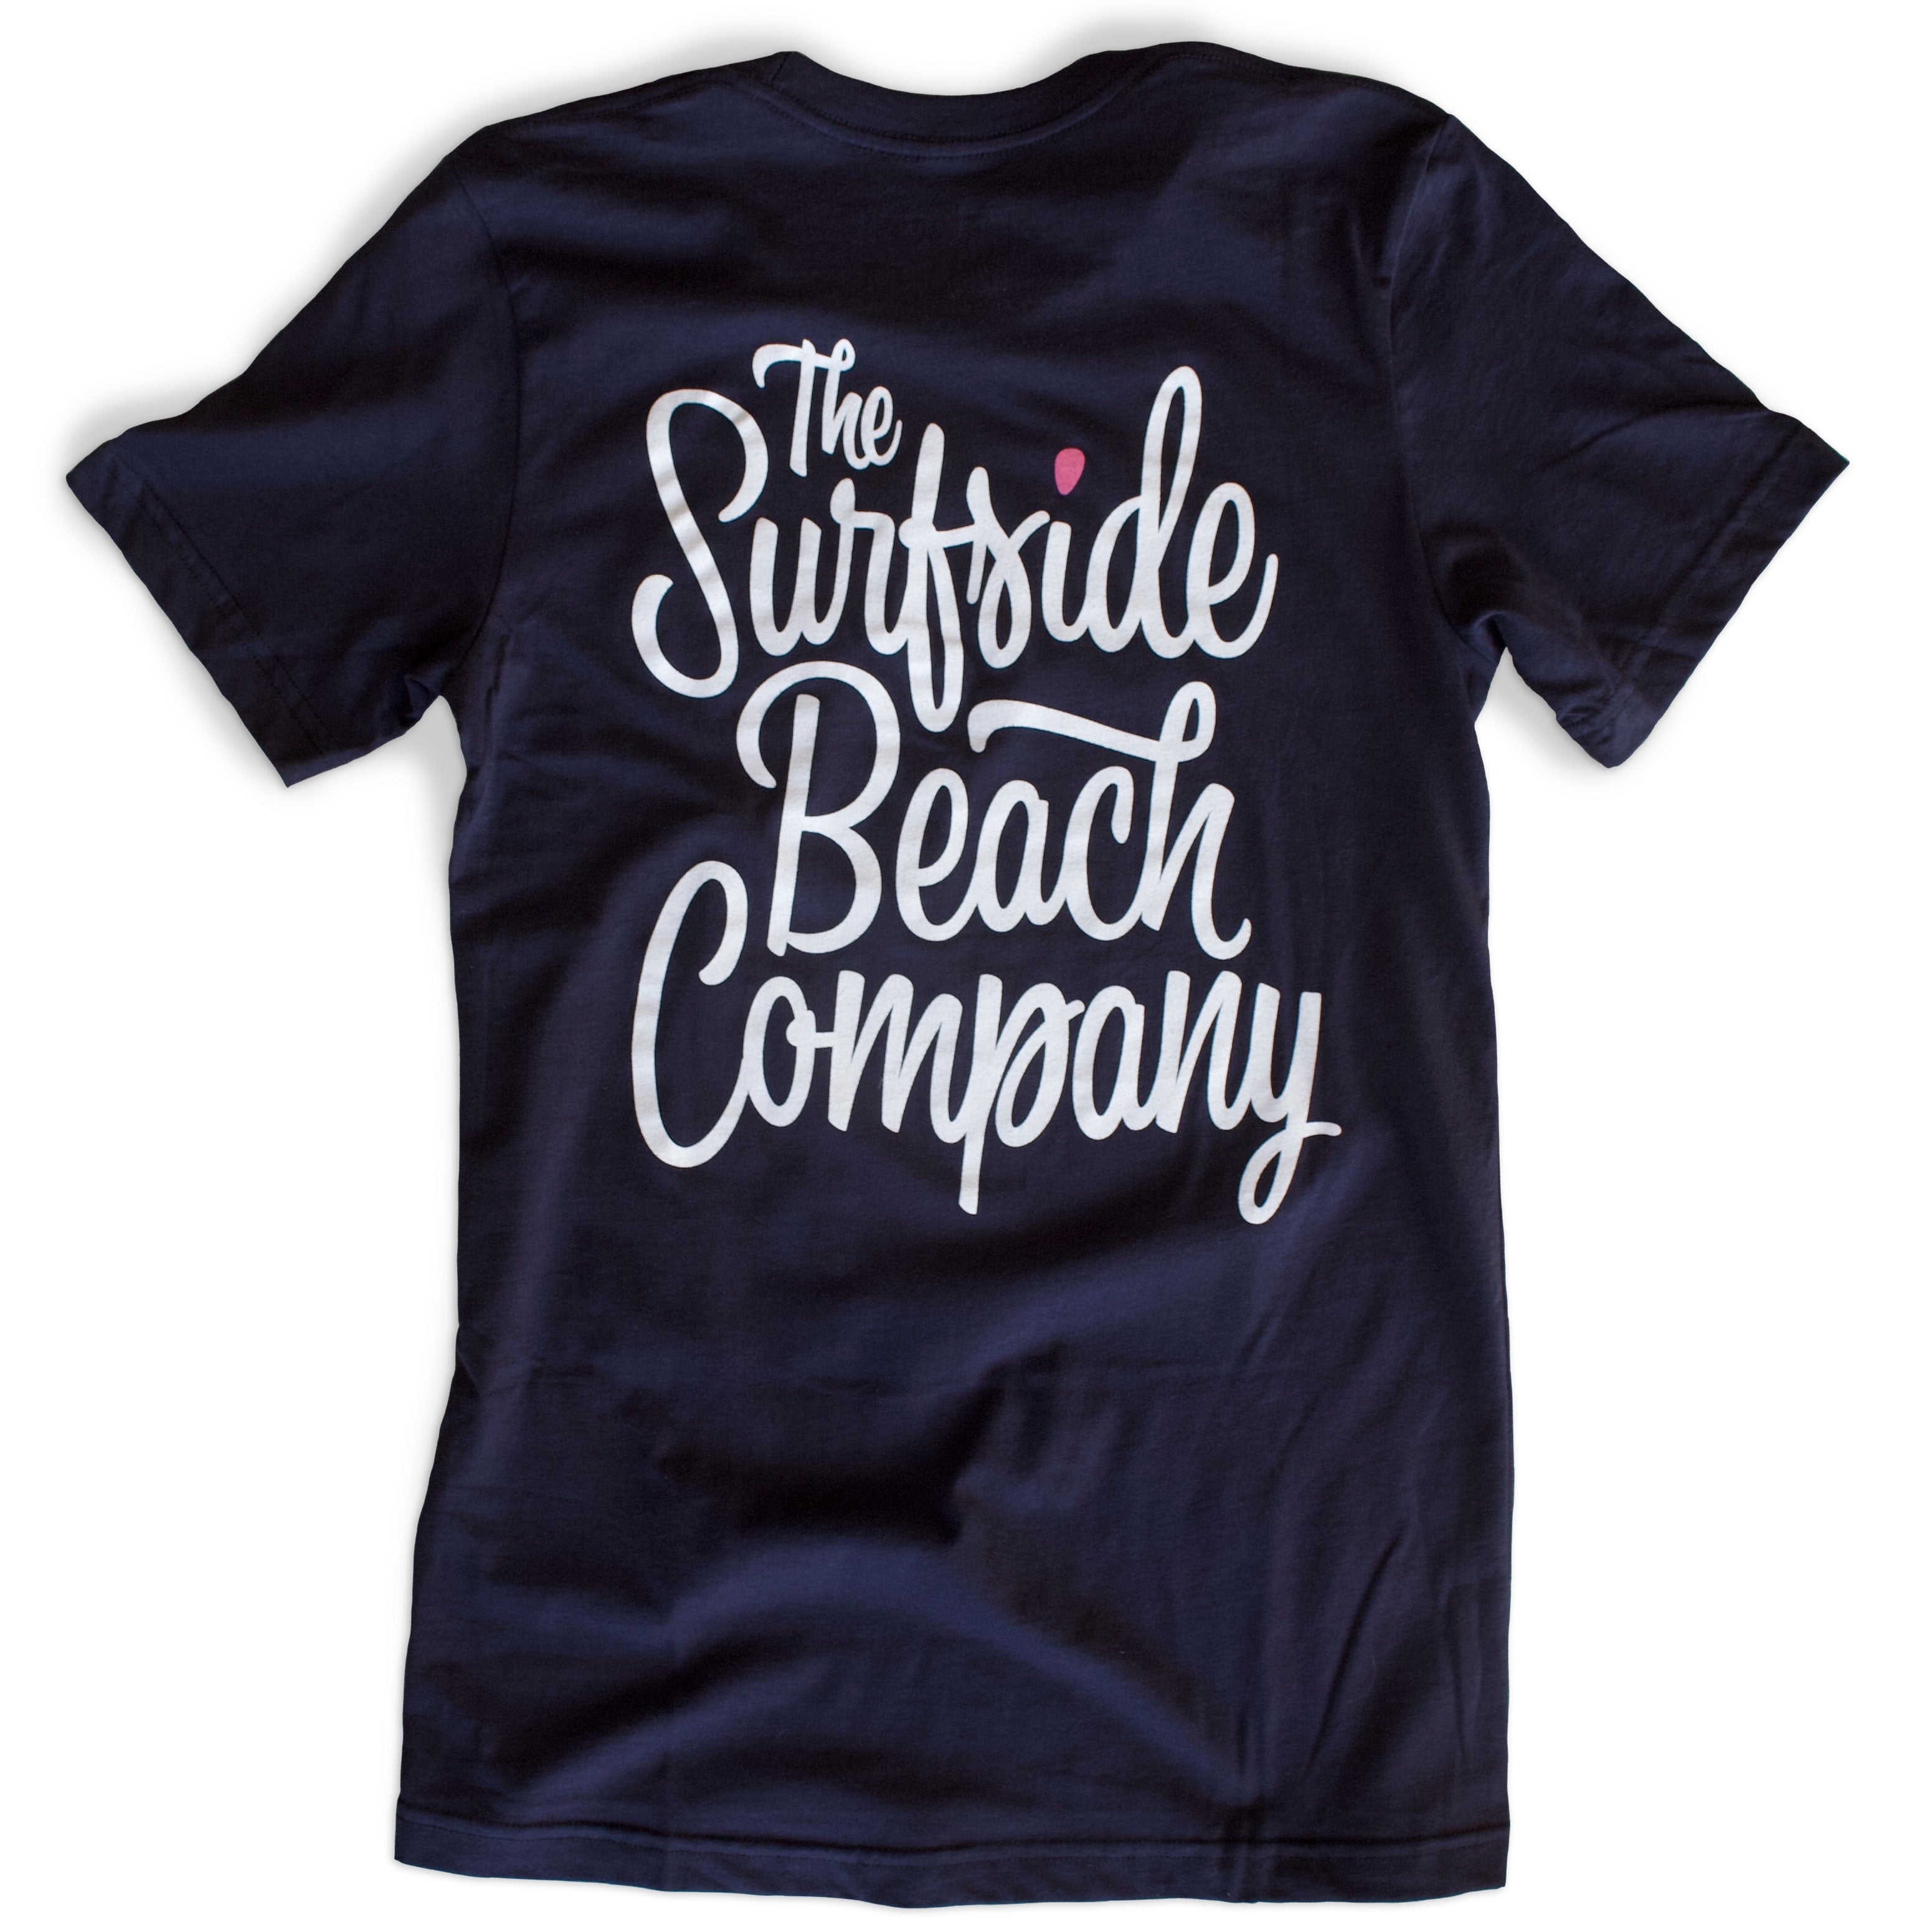 Surfside Beach Company T-shirts